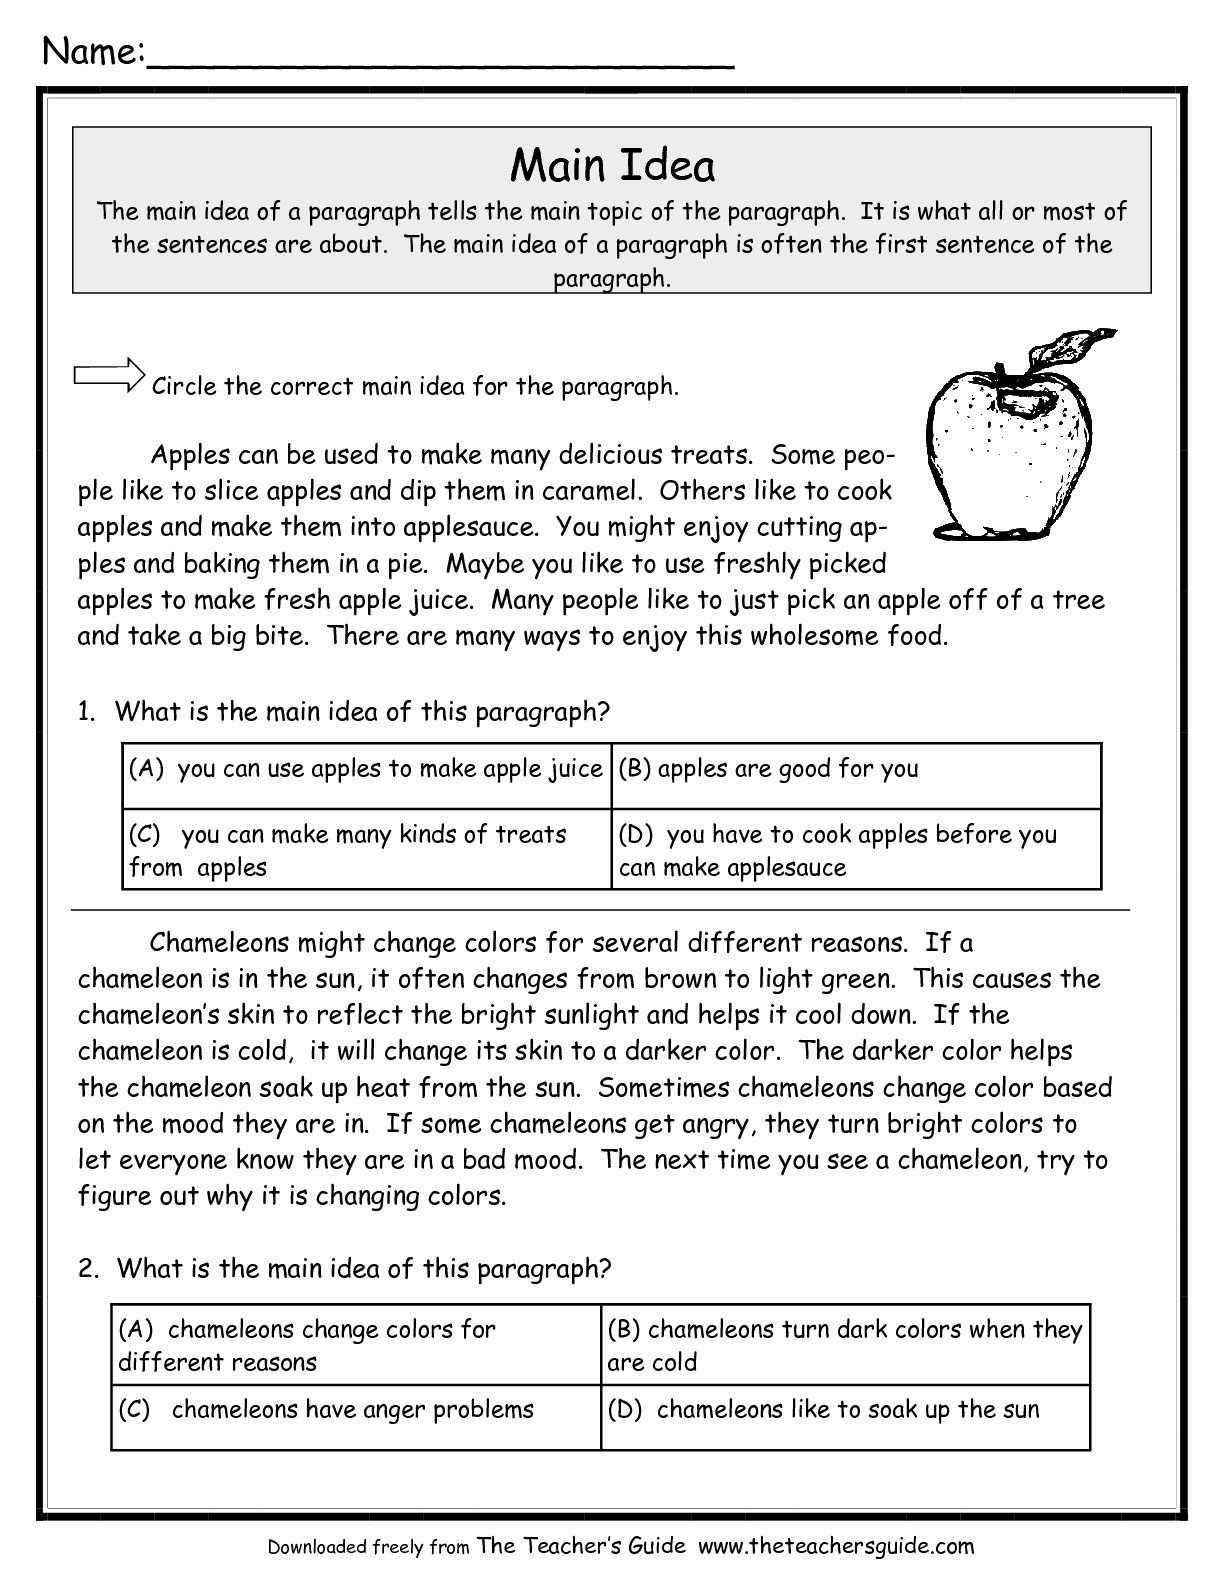 Main Idea Worksheet 4th Grade Lovely Main Idea Worksheets From the Teacher S Guide